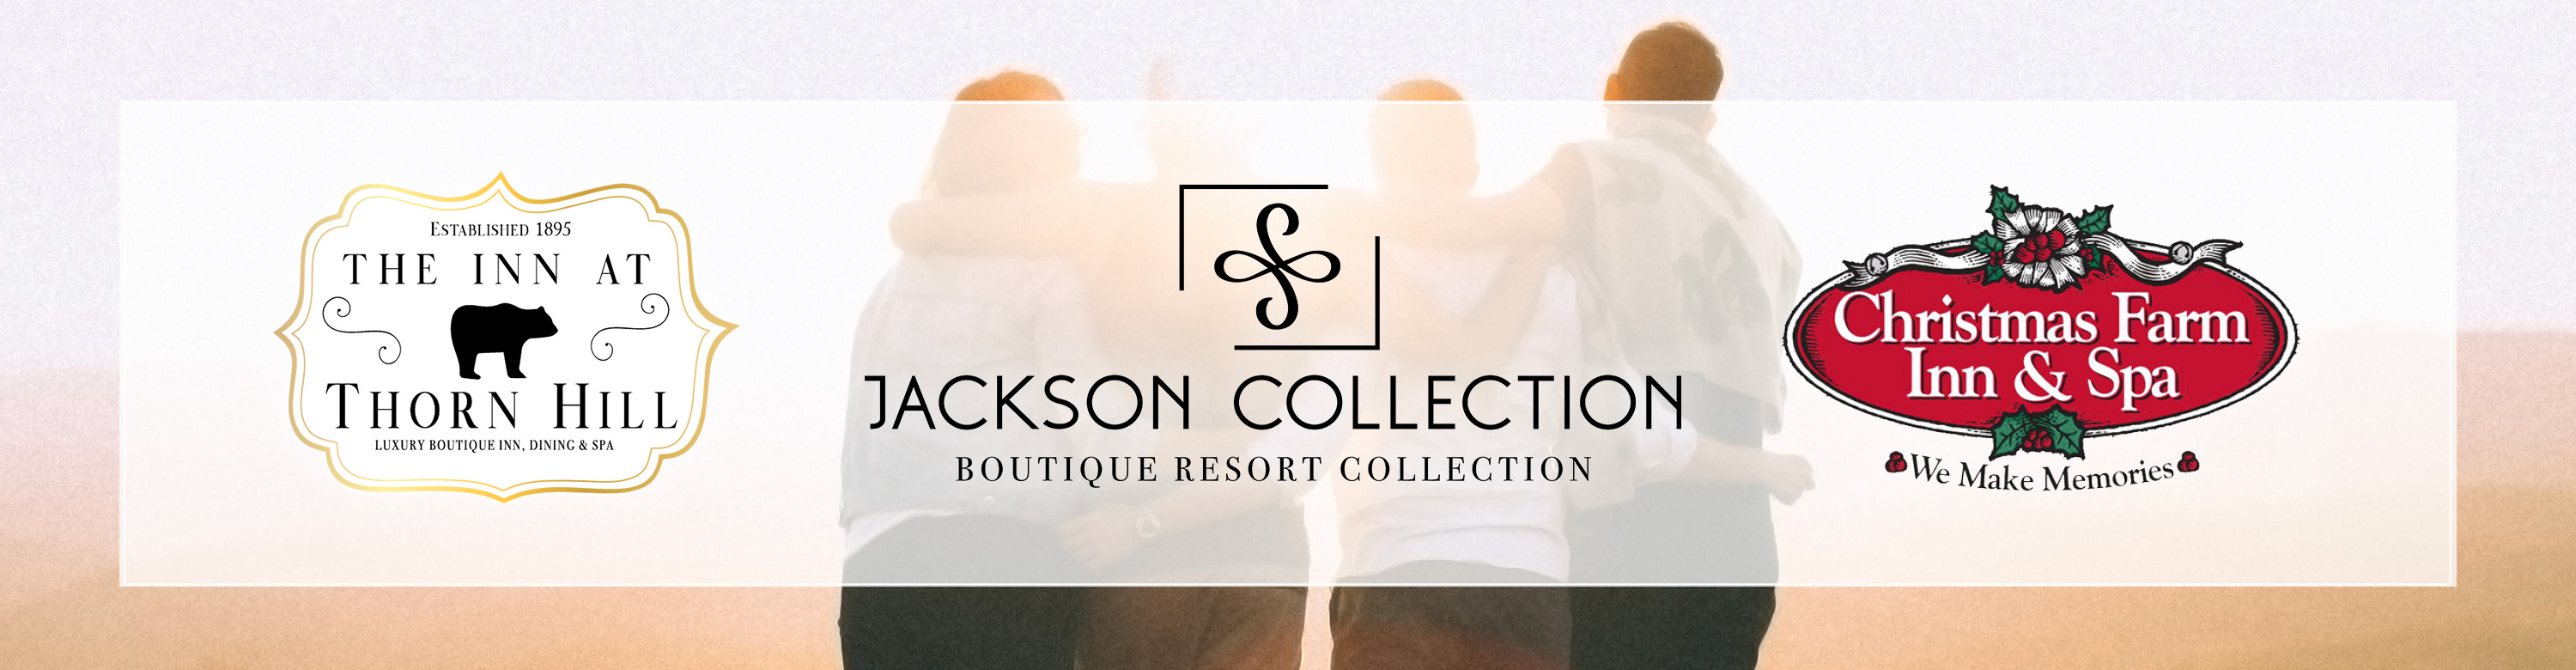 Jackson Collection Header Image